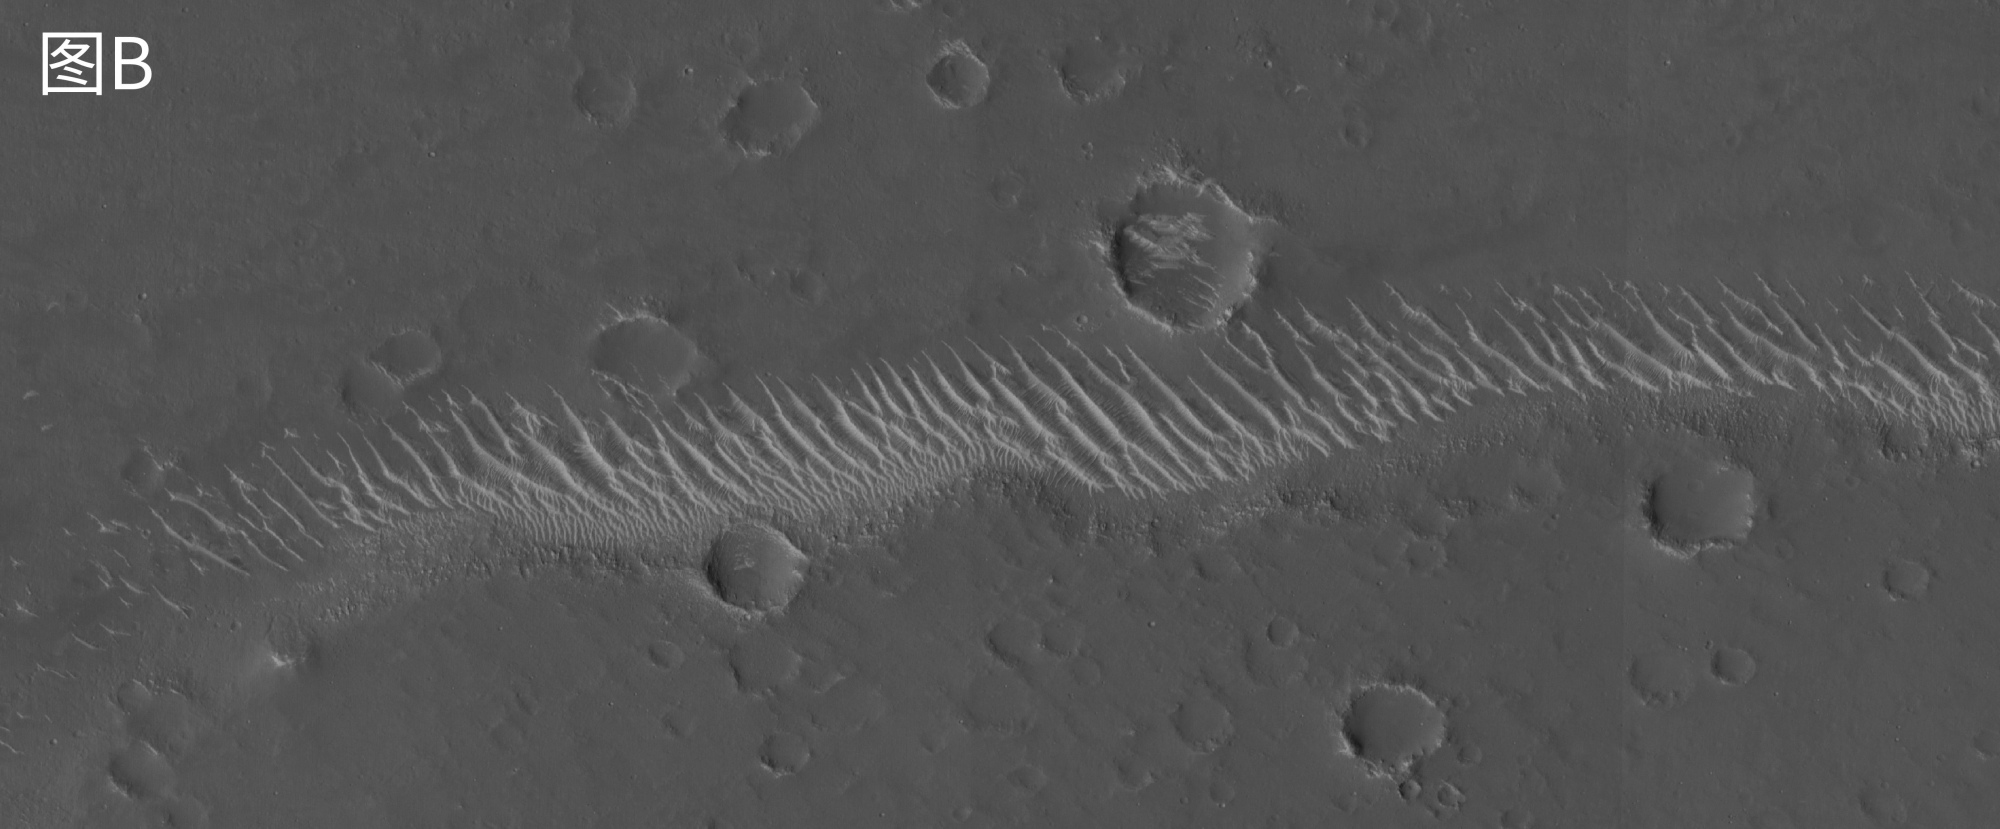 11_Tianwen-1-orbiter_HiRIC_Utopia-Planitia_landing-site_dunes-row.thumb.jpg.bab3a0cf27e287b331419be635107cc6.jpg